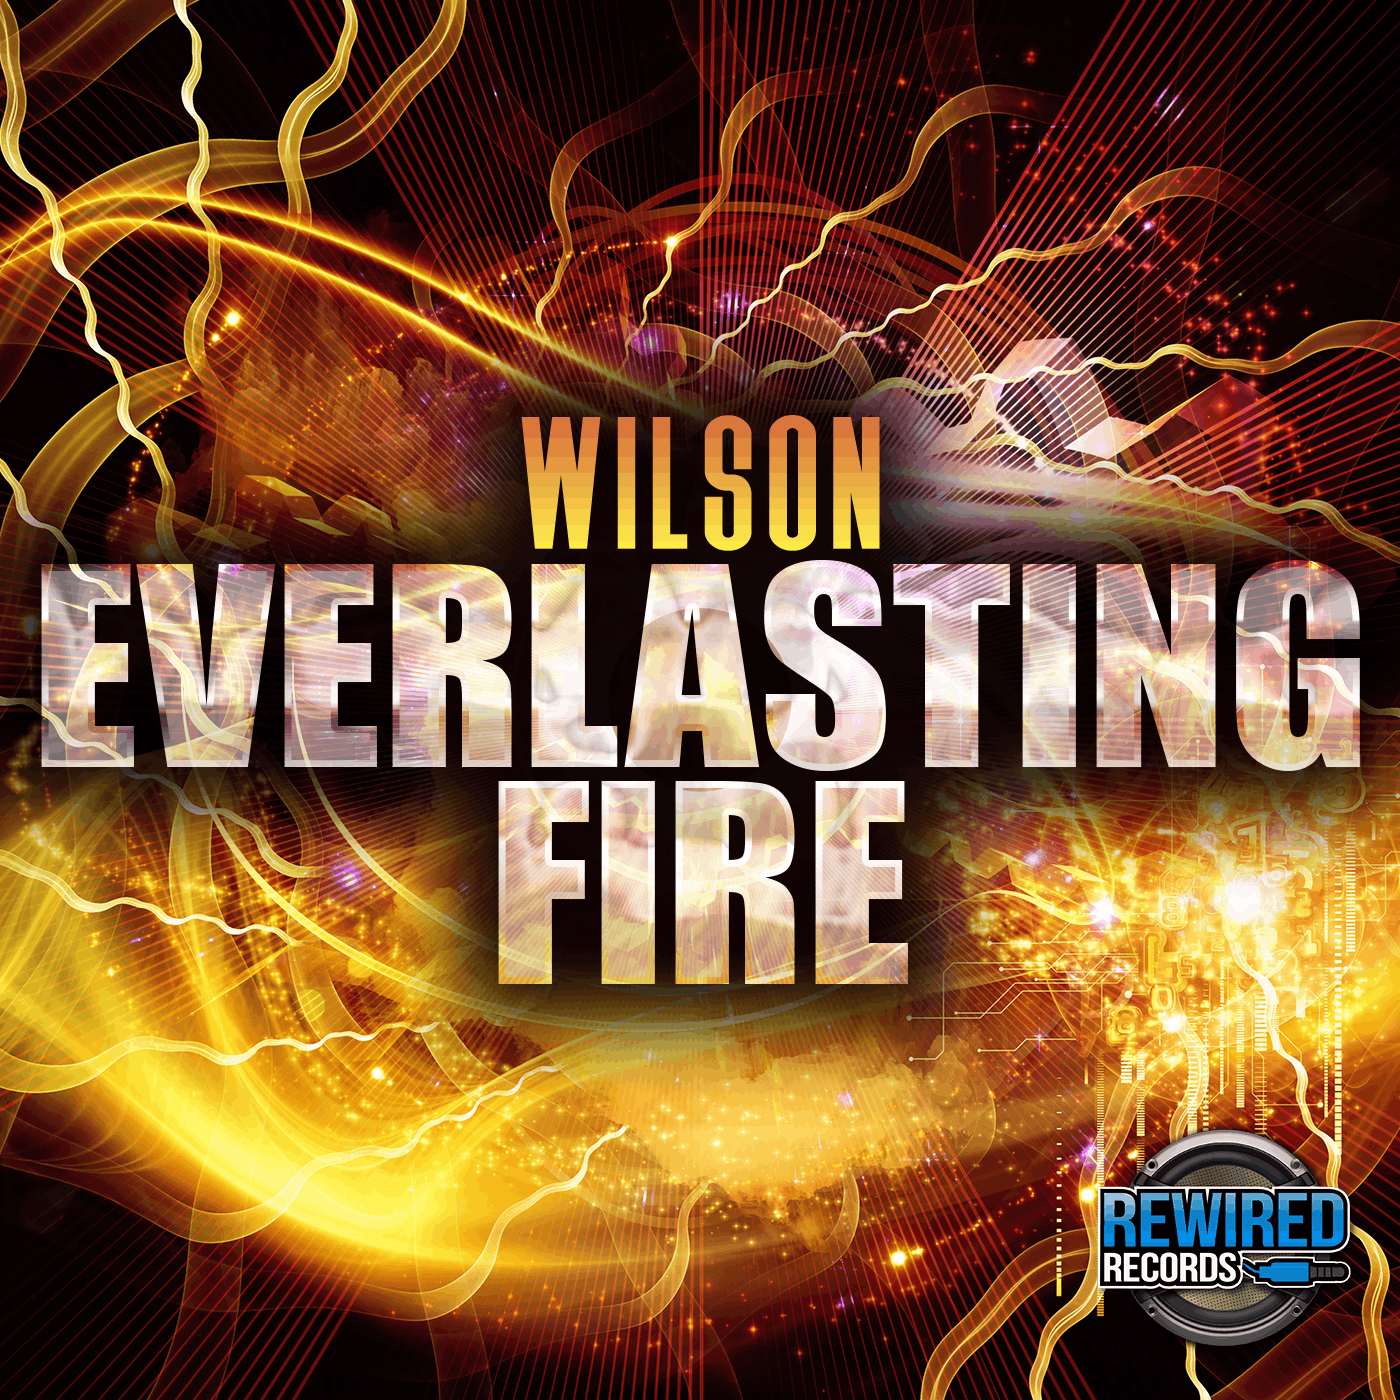 Wilson - Everlasting Fire - Rewired Records